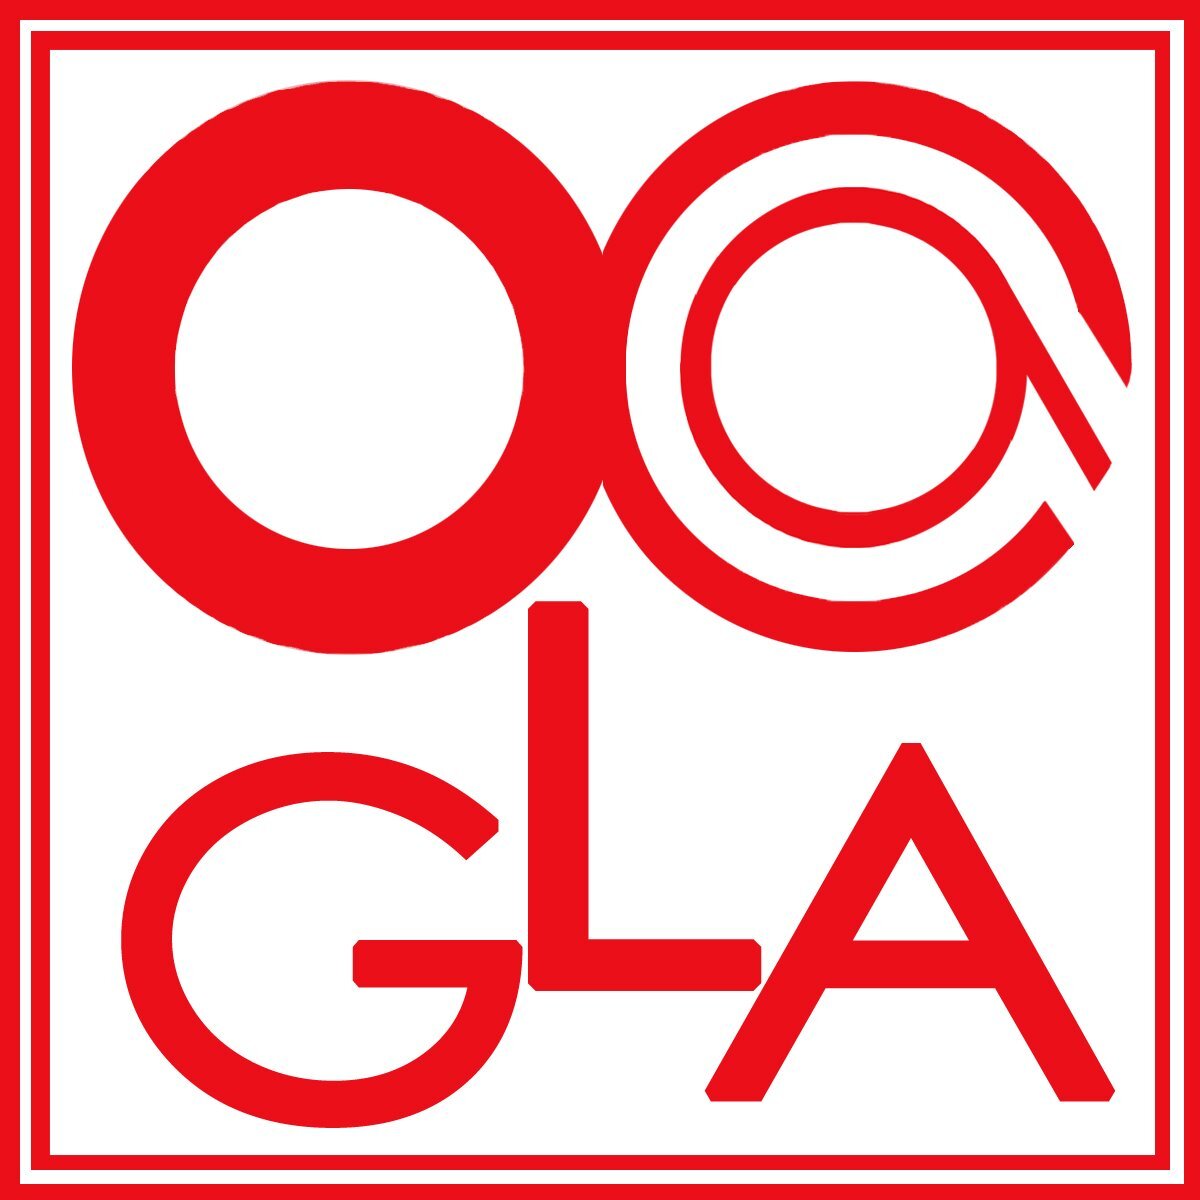 OCA - Greater Los Angeles